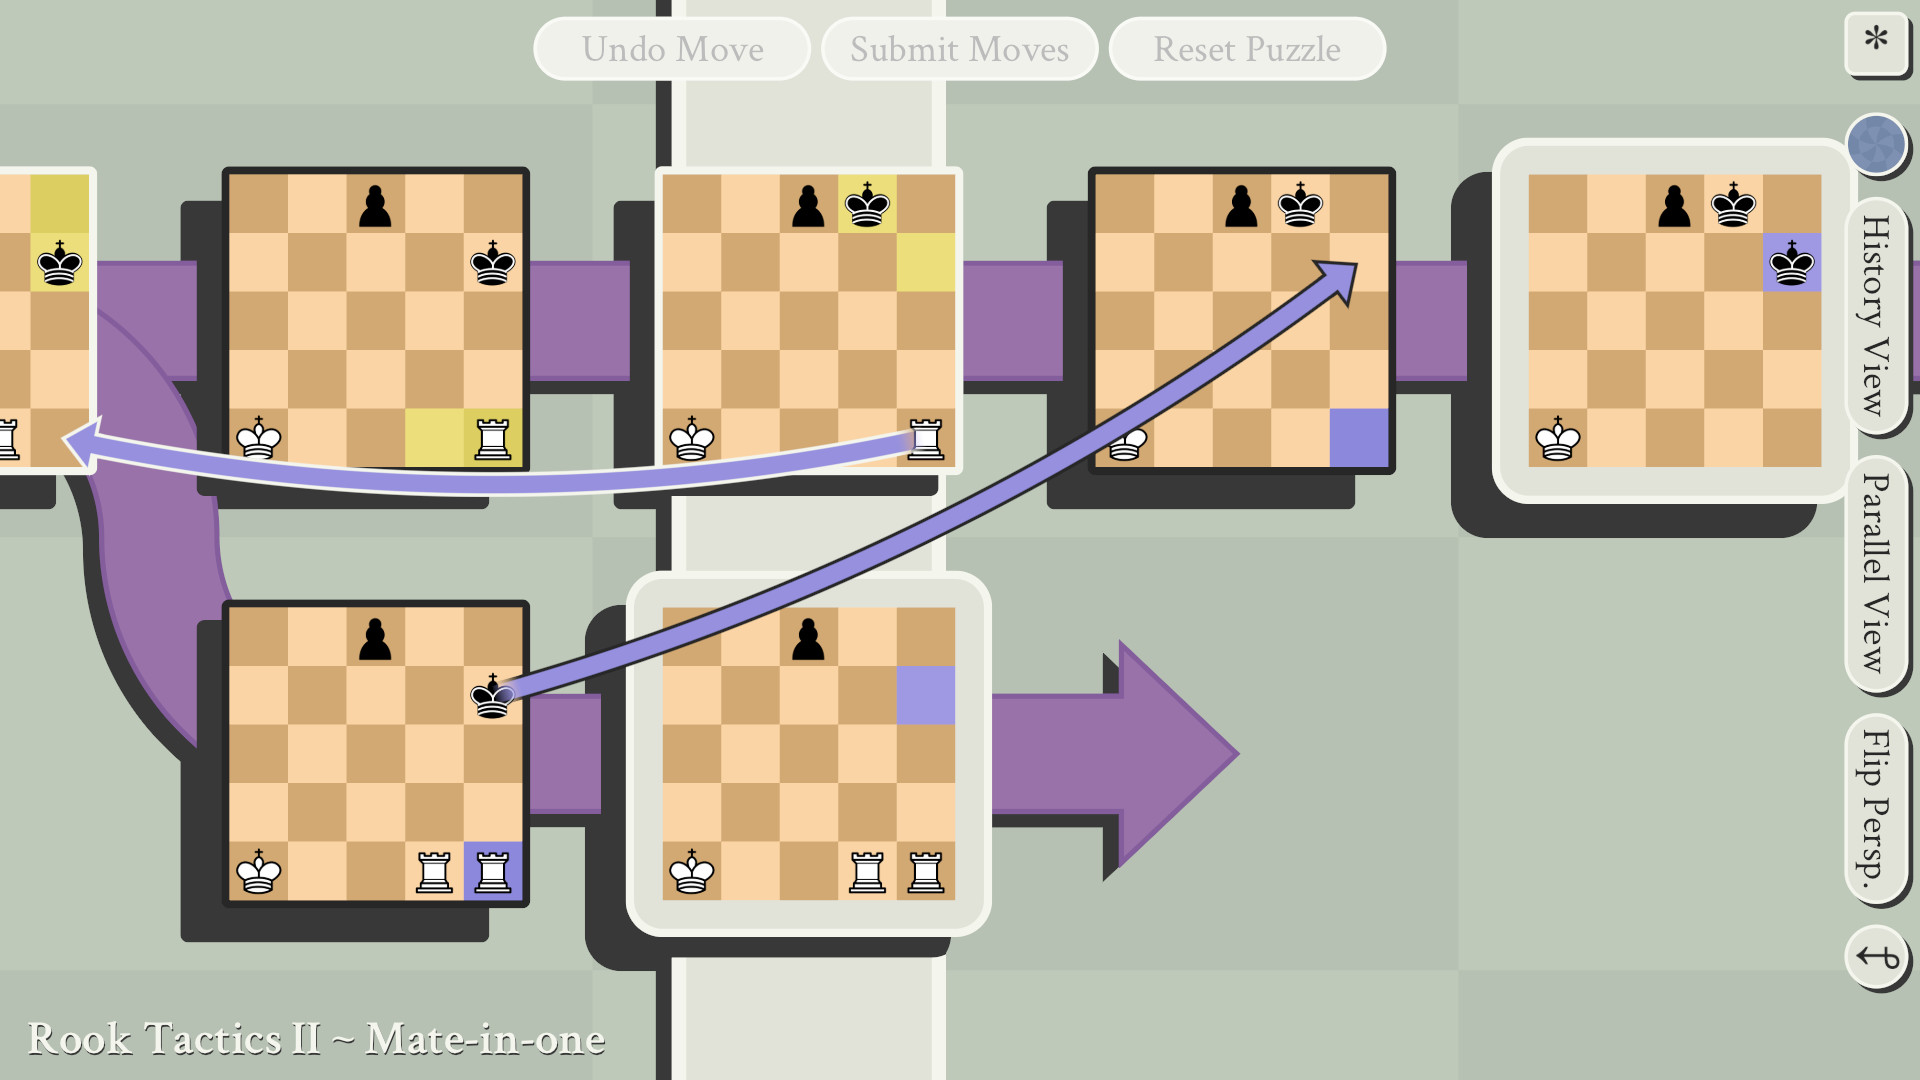 Como jogar 5D Chess with Multiverse Time Travel (Xadrez 5D) 